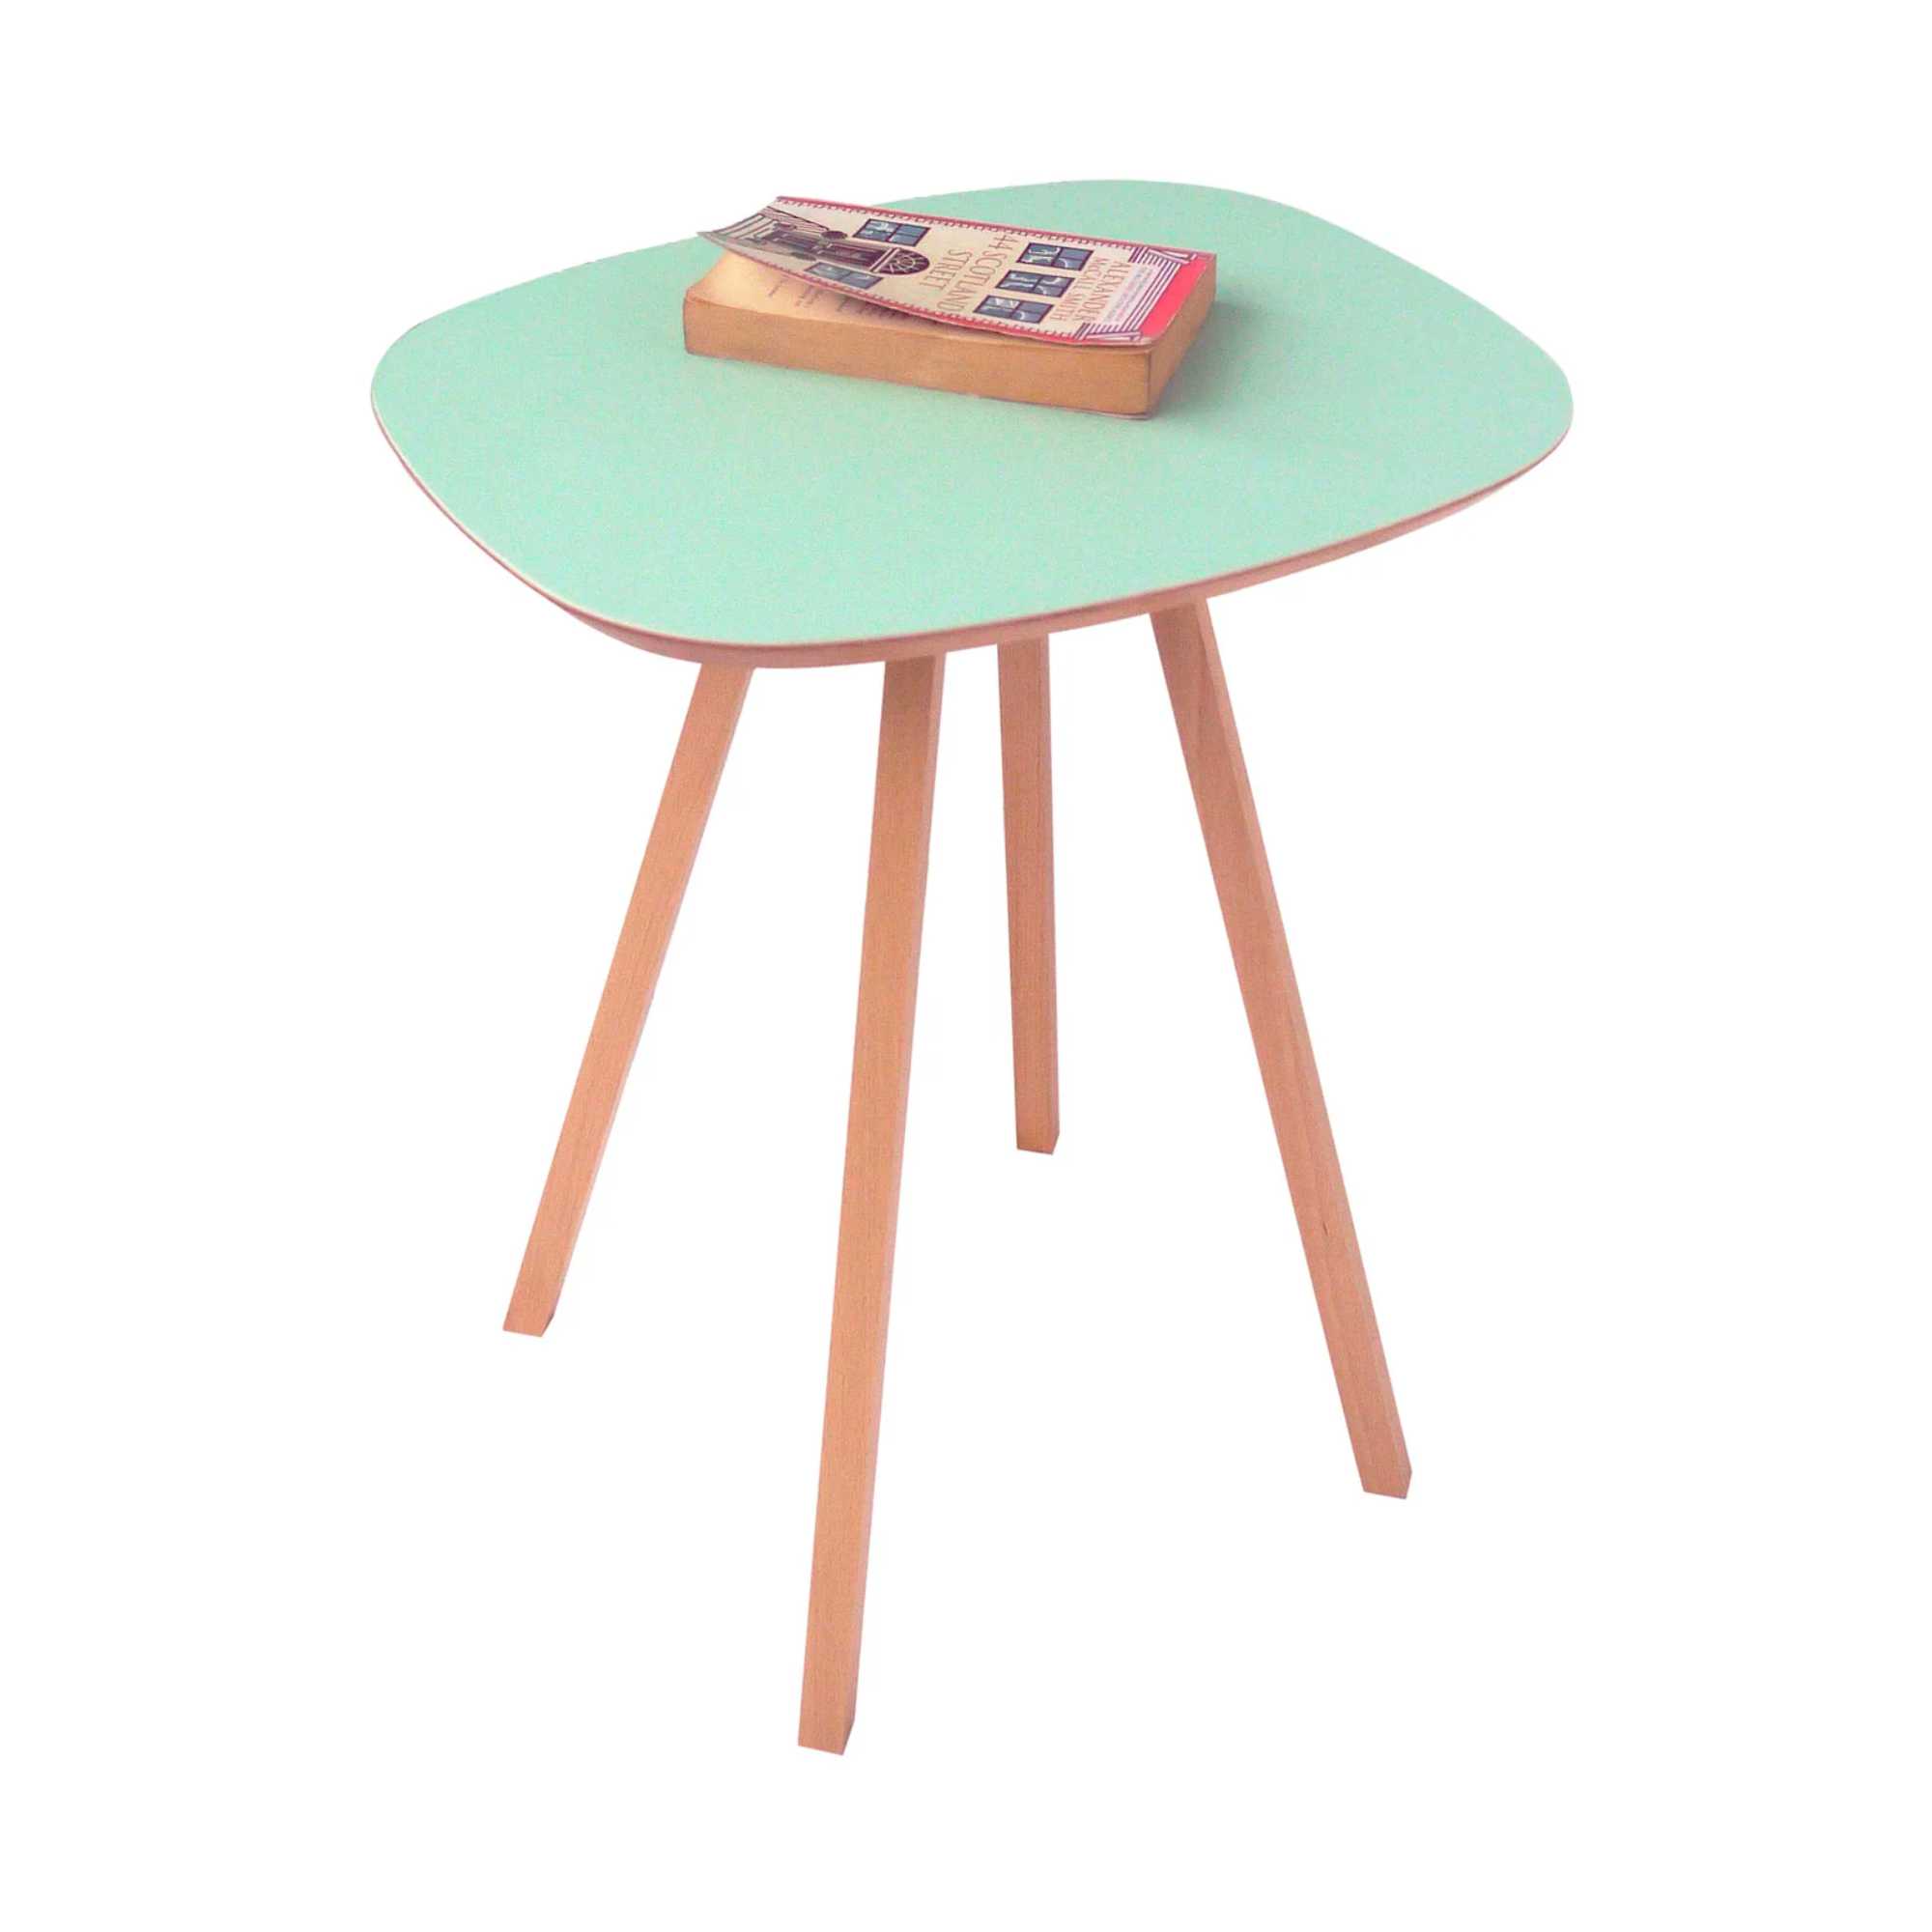 Studio Domo Simple Wood Side Table, light green